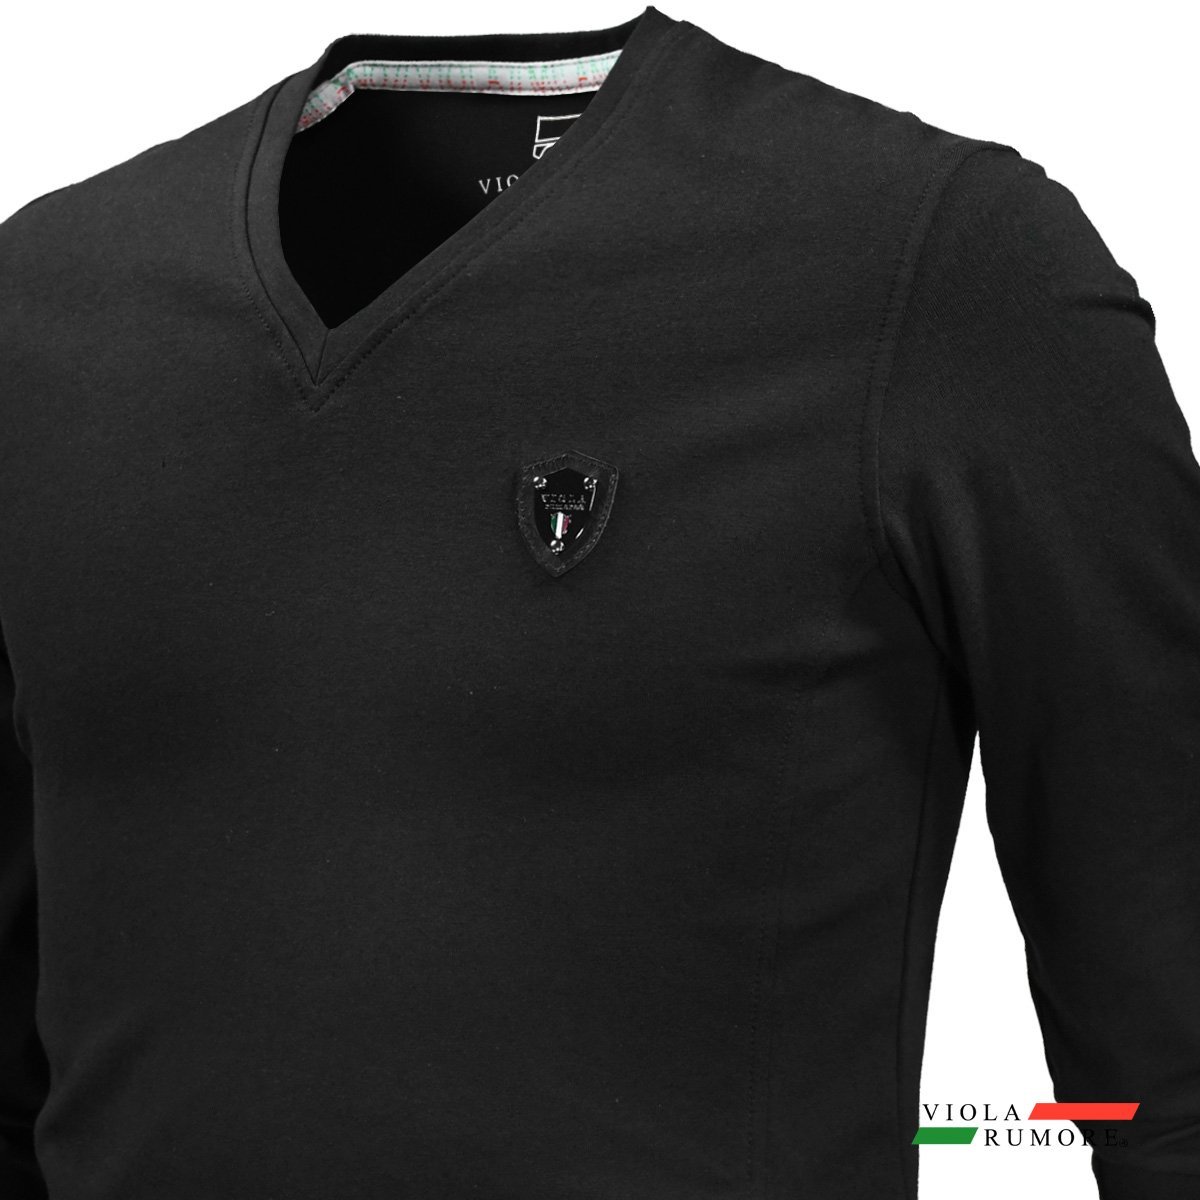 21111-bk VIOLA rumore ヴィオラルモーレ ビオラ Tシャツ Vネック 背中プリント 7 シンプル 細身 長袖Tシャツ メンズ(ブラック黒) M_画像4